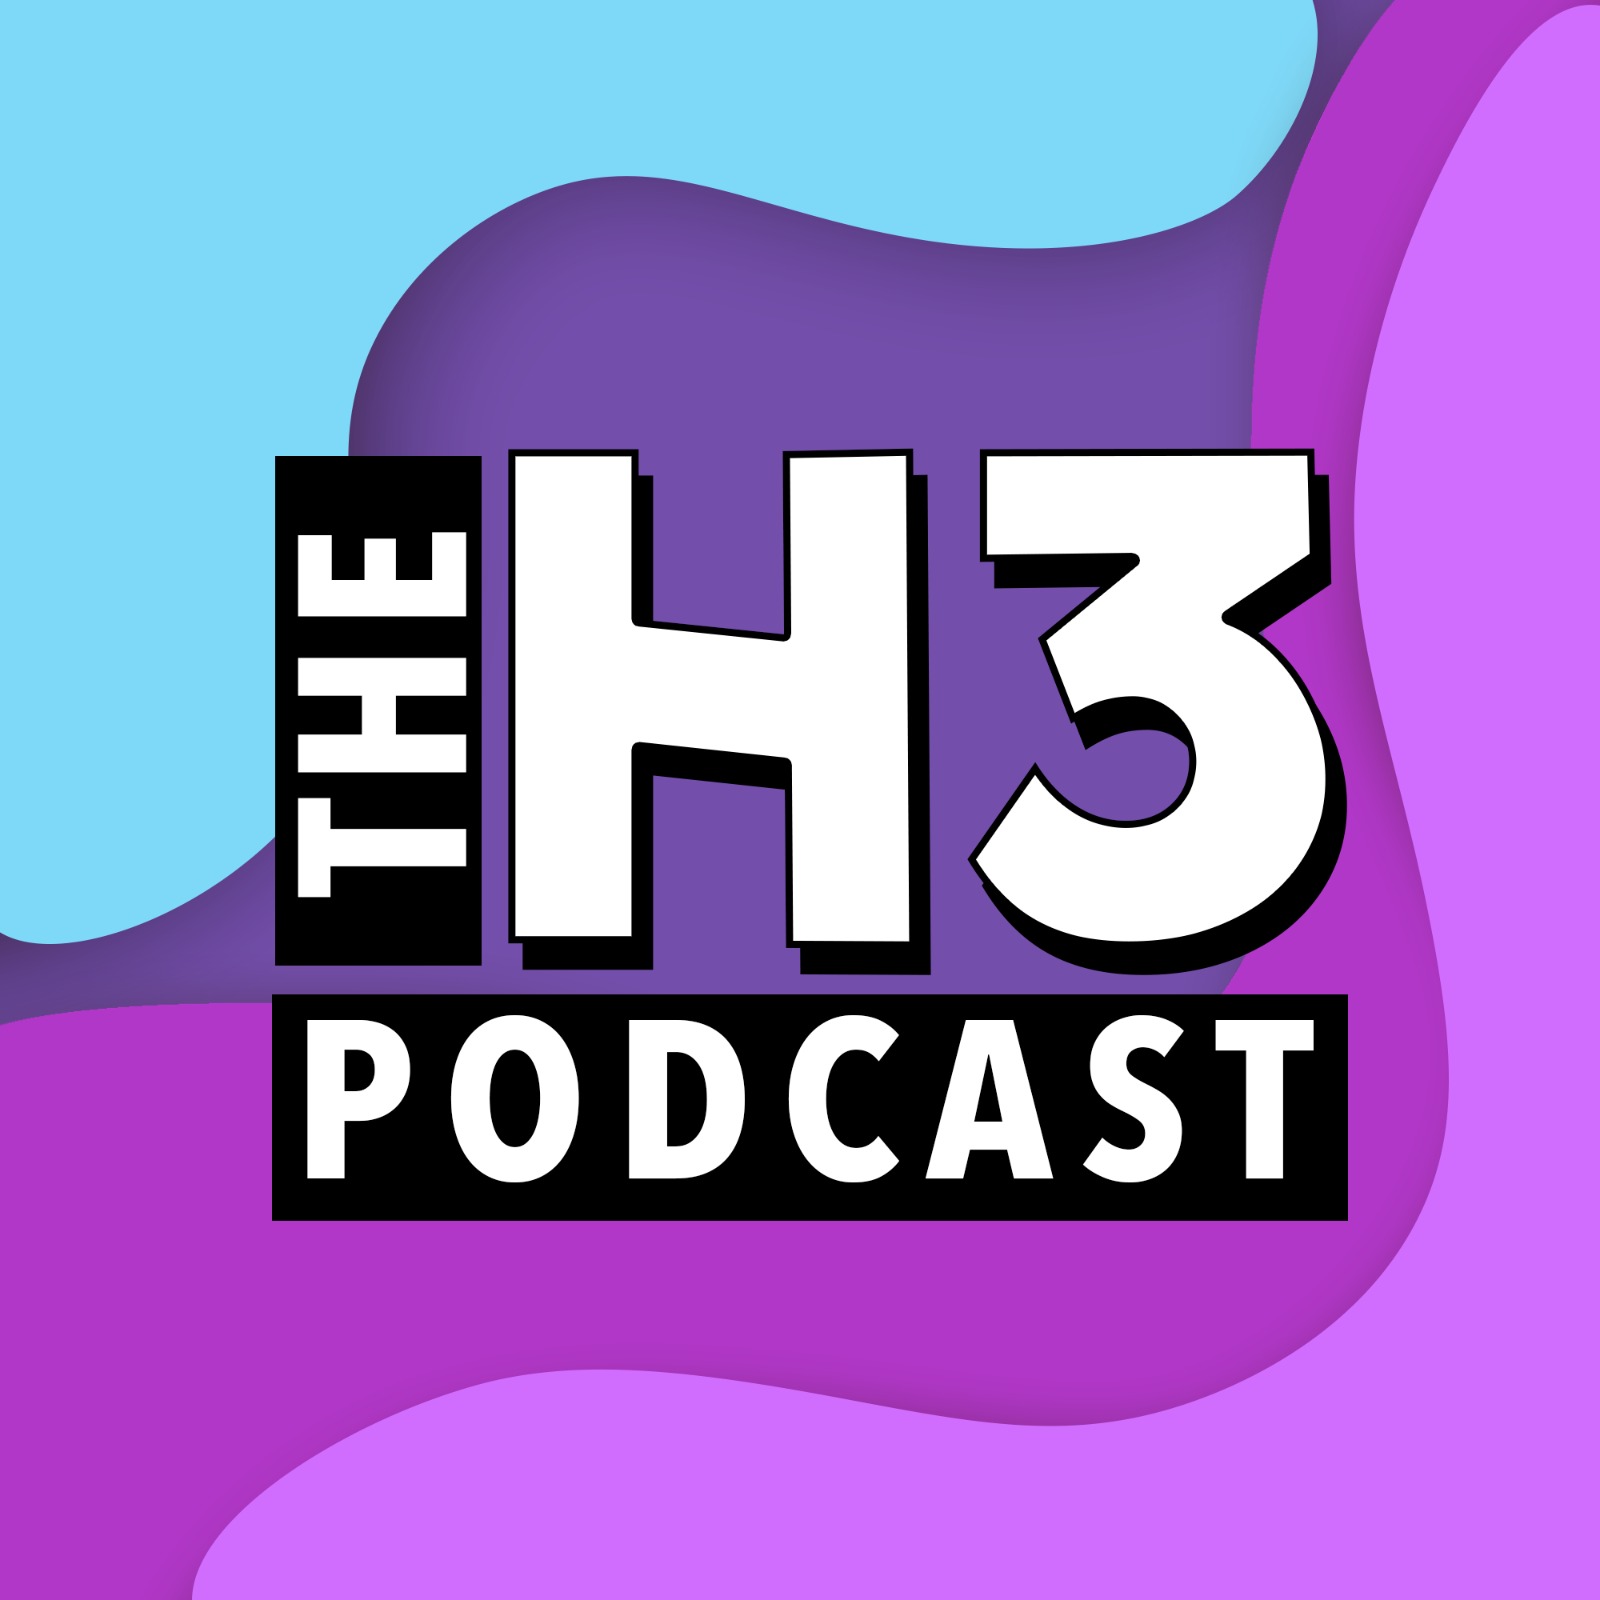 h3 podcast ab